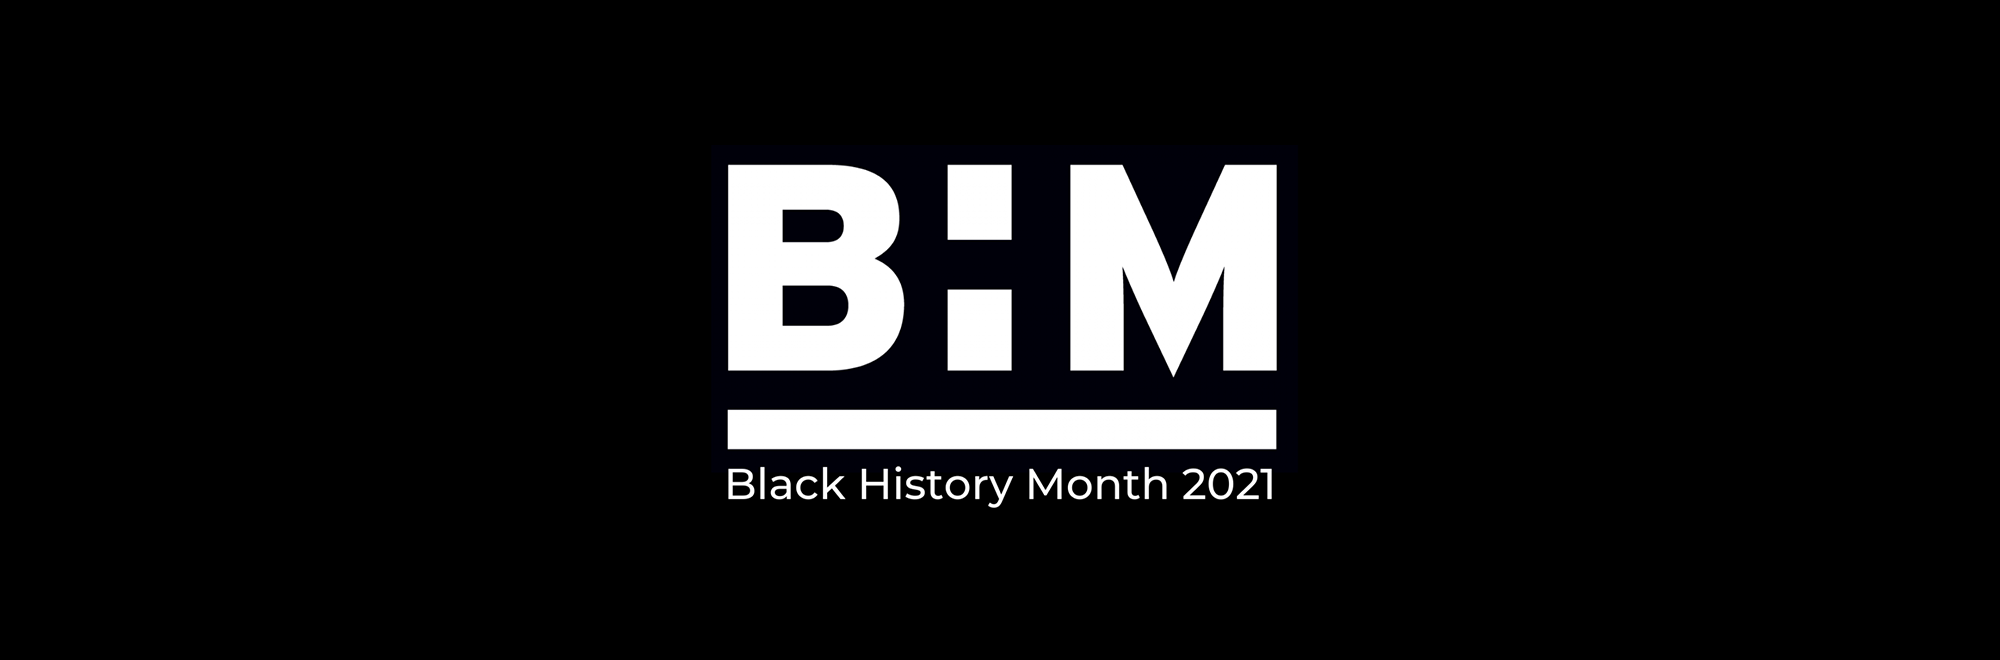 Clarks Originals, EA Sports and Channel 4 champion Black voices beyond Black History Month